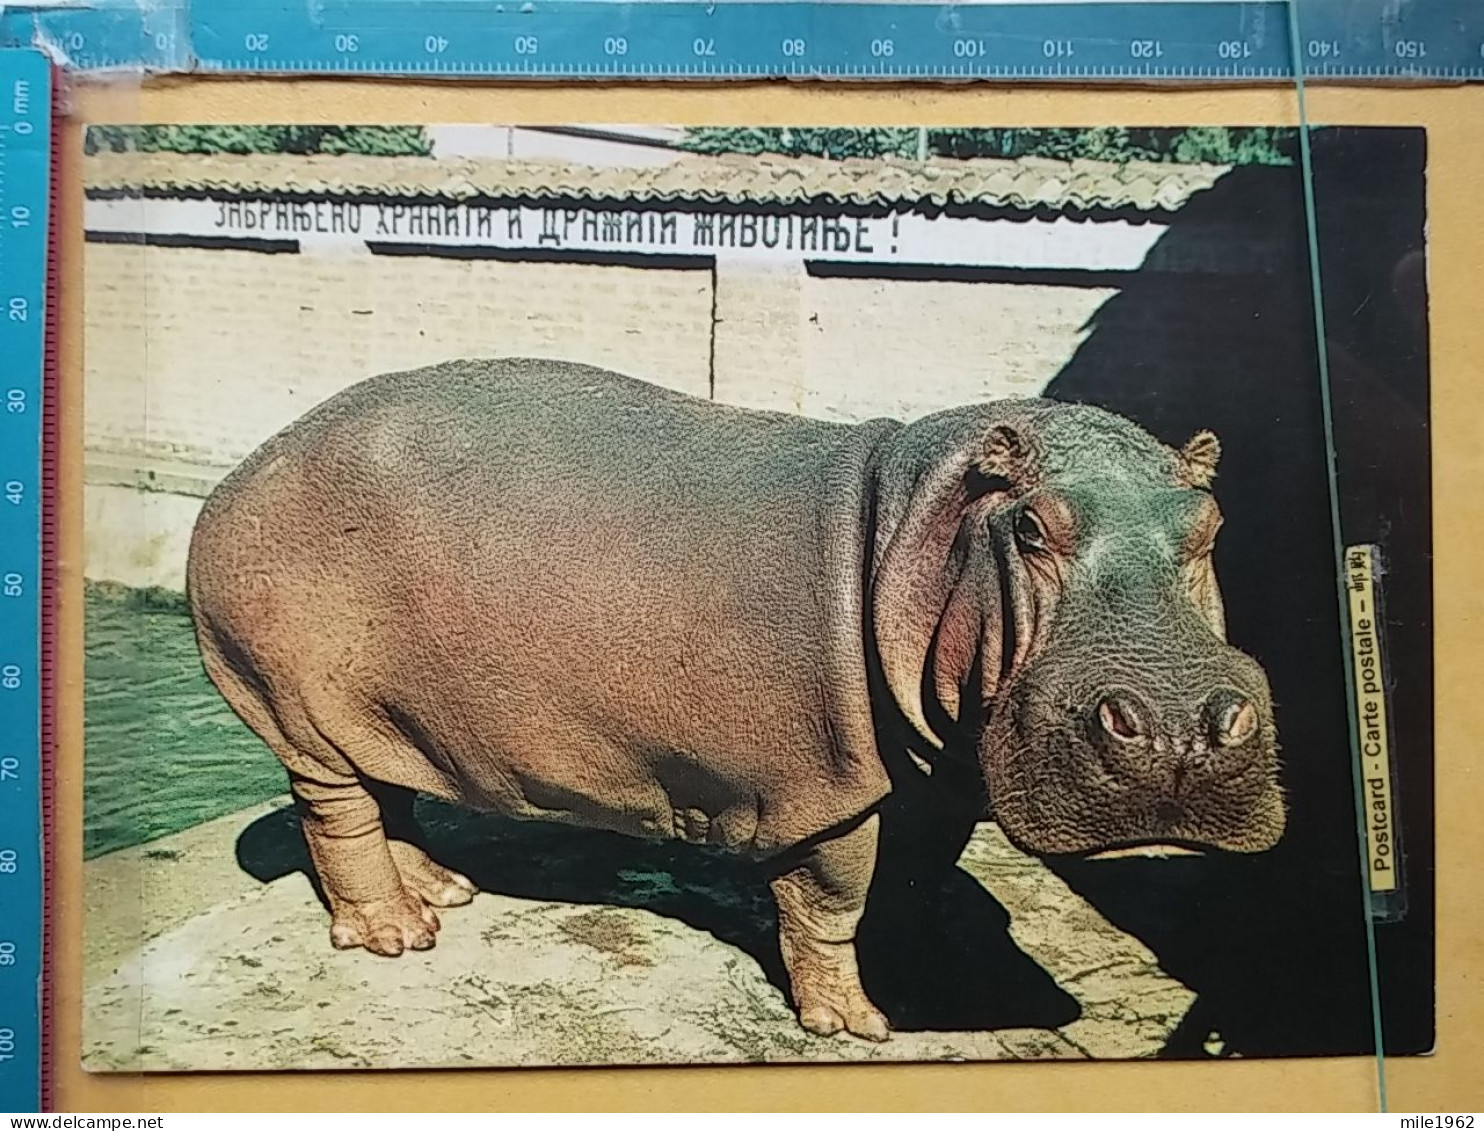 KOV 506-58 - HIPPOPOTUMUS,  - Hippopotamuses